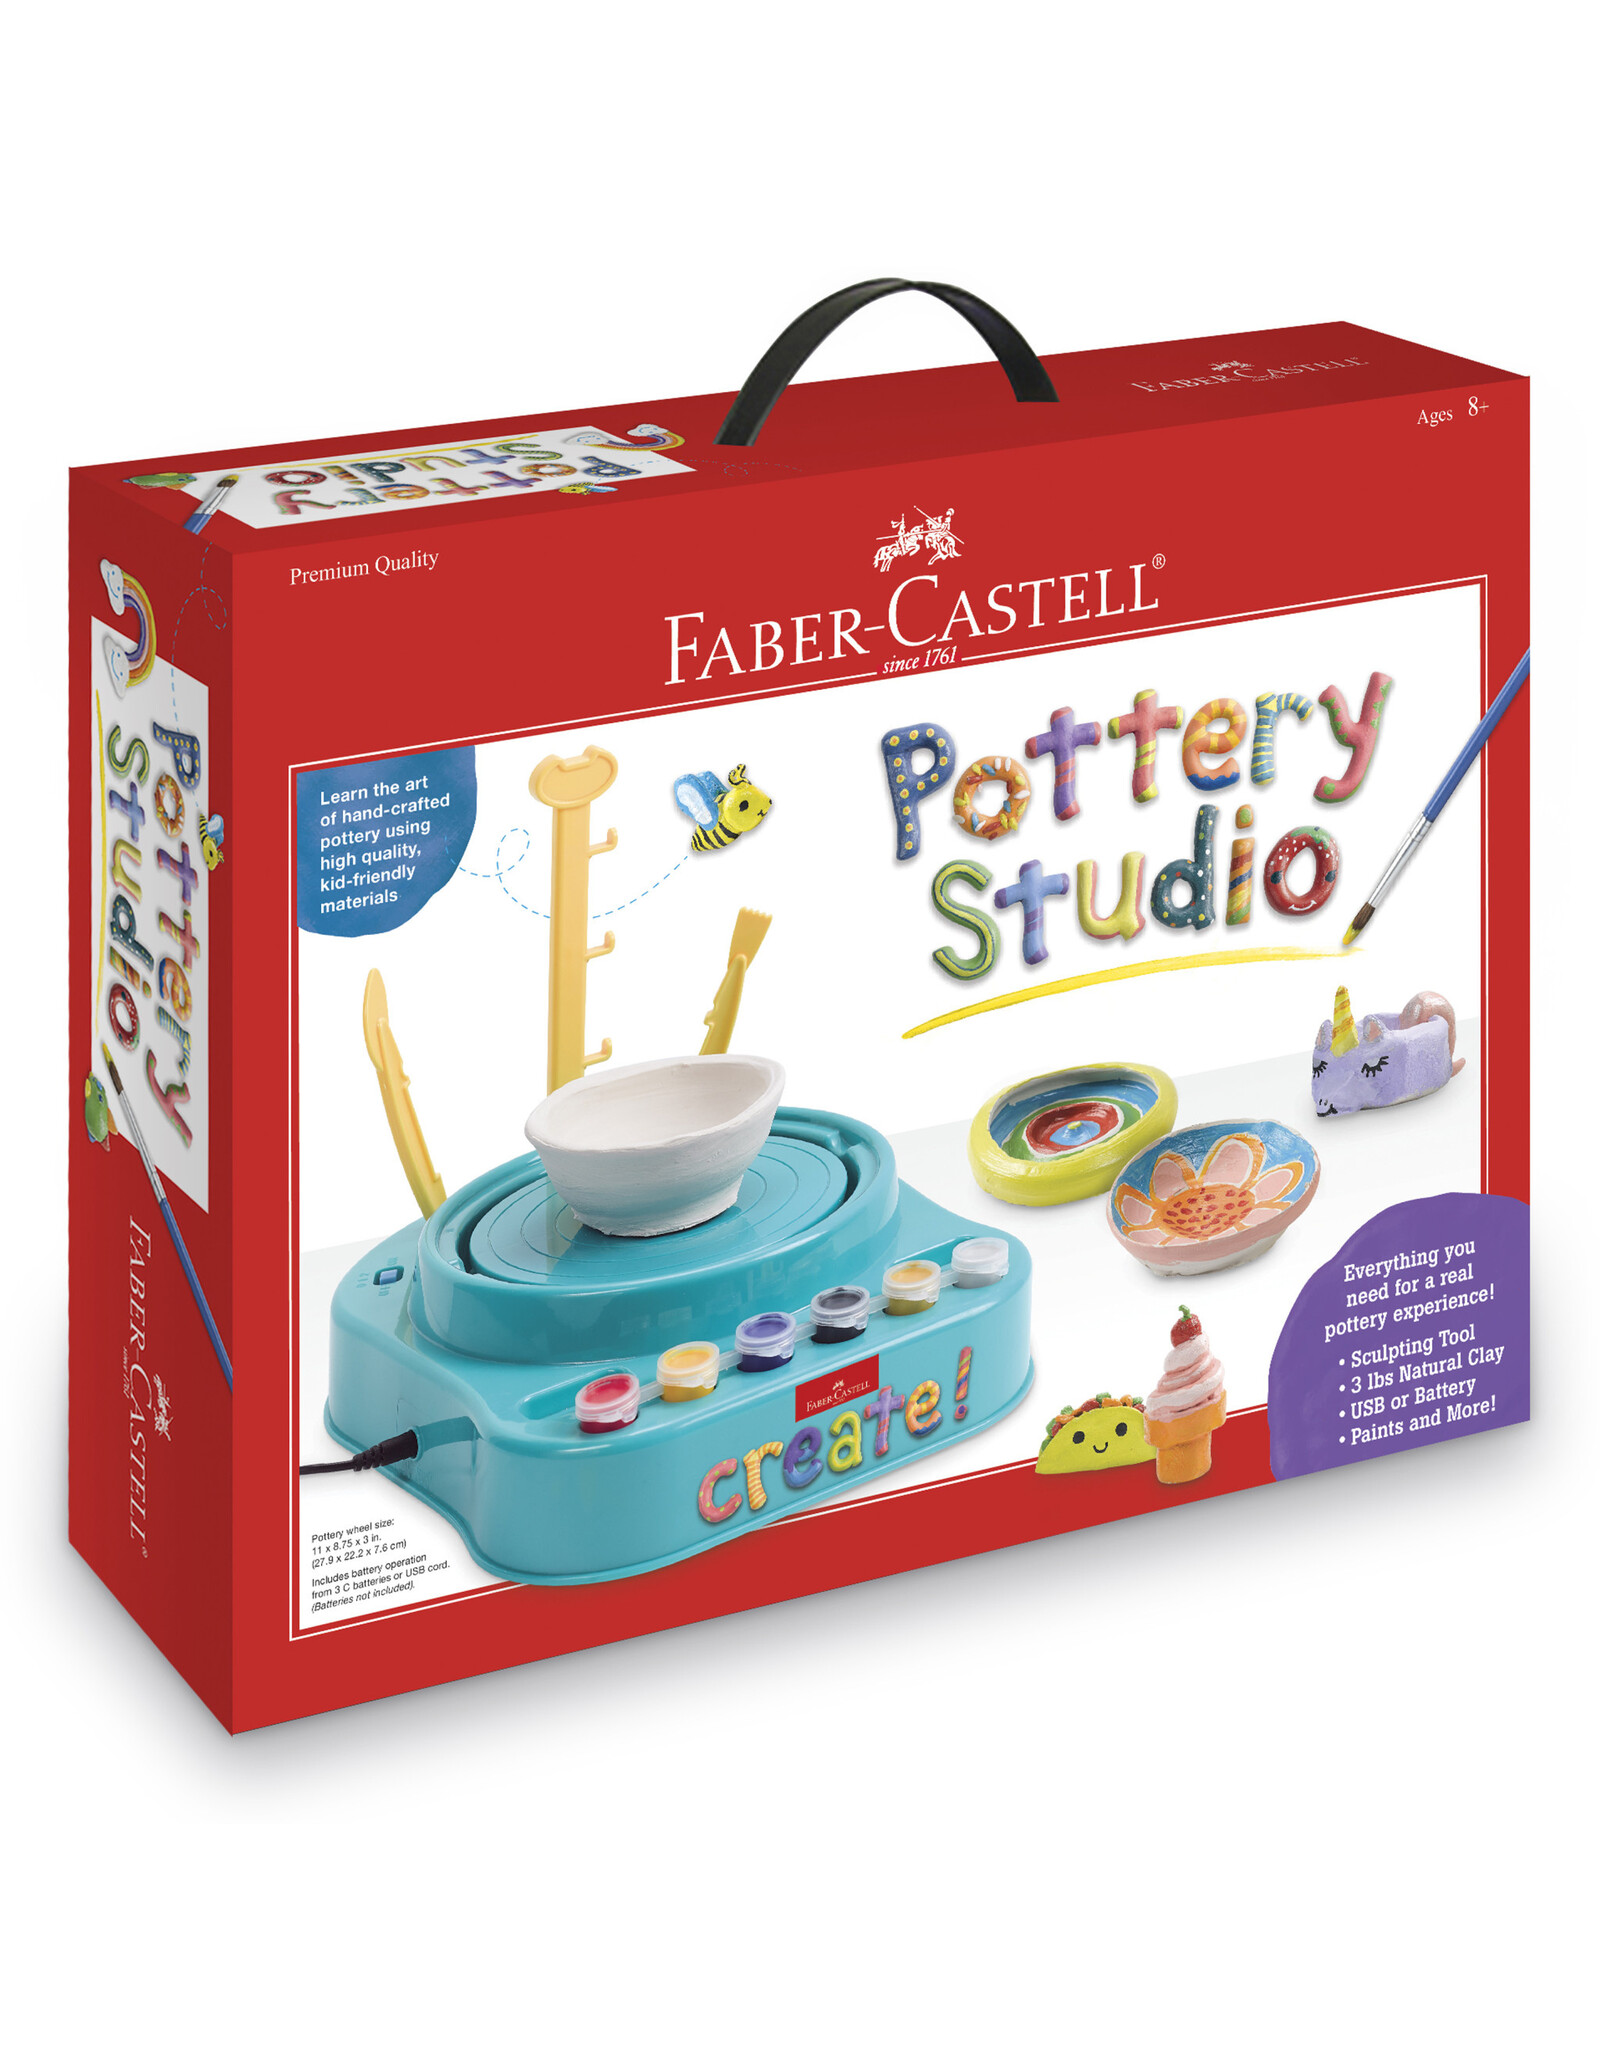 FABER-CASTELL Faber Castell Do Art Pottery Studio